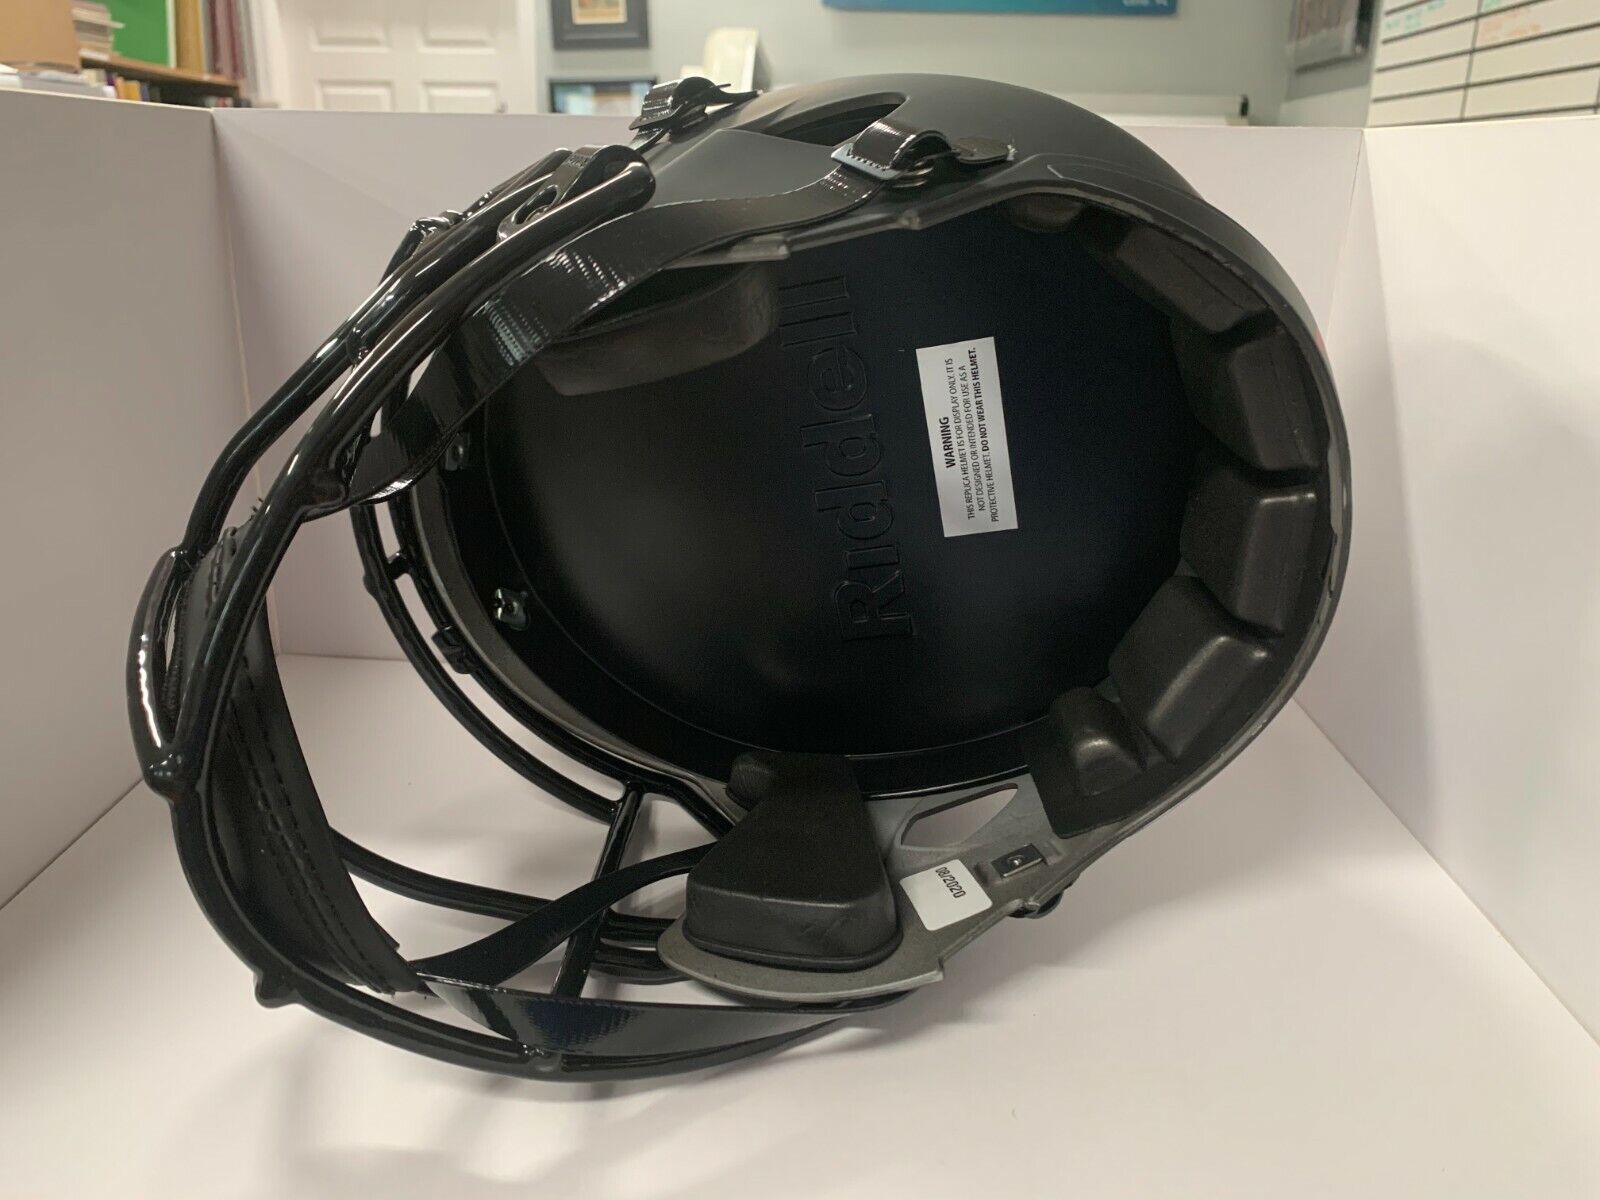 New England Patriots Eclipse Full Size Replica Helmet New In Box